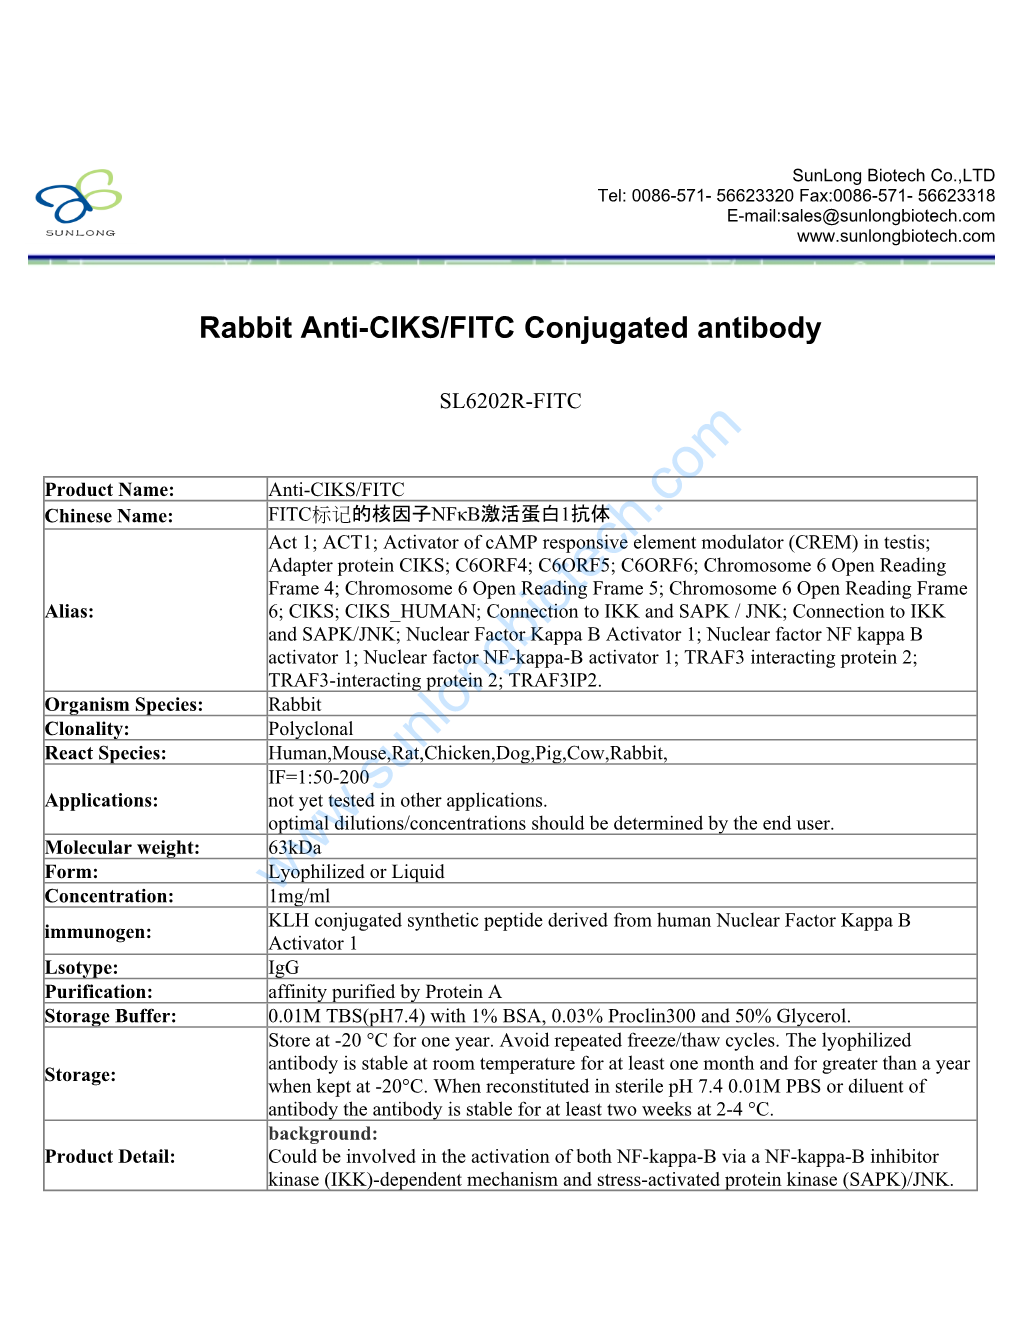 Rabbit Anti-CIKS/FITC Conjugated Antibody